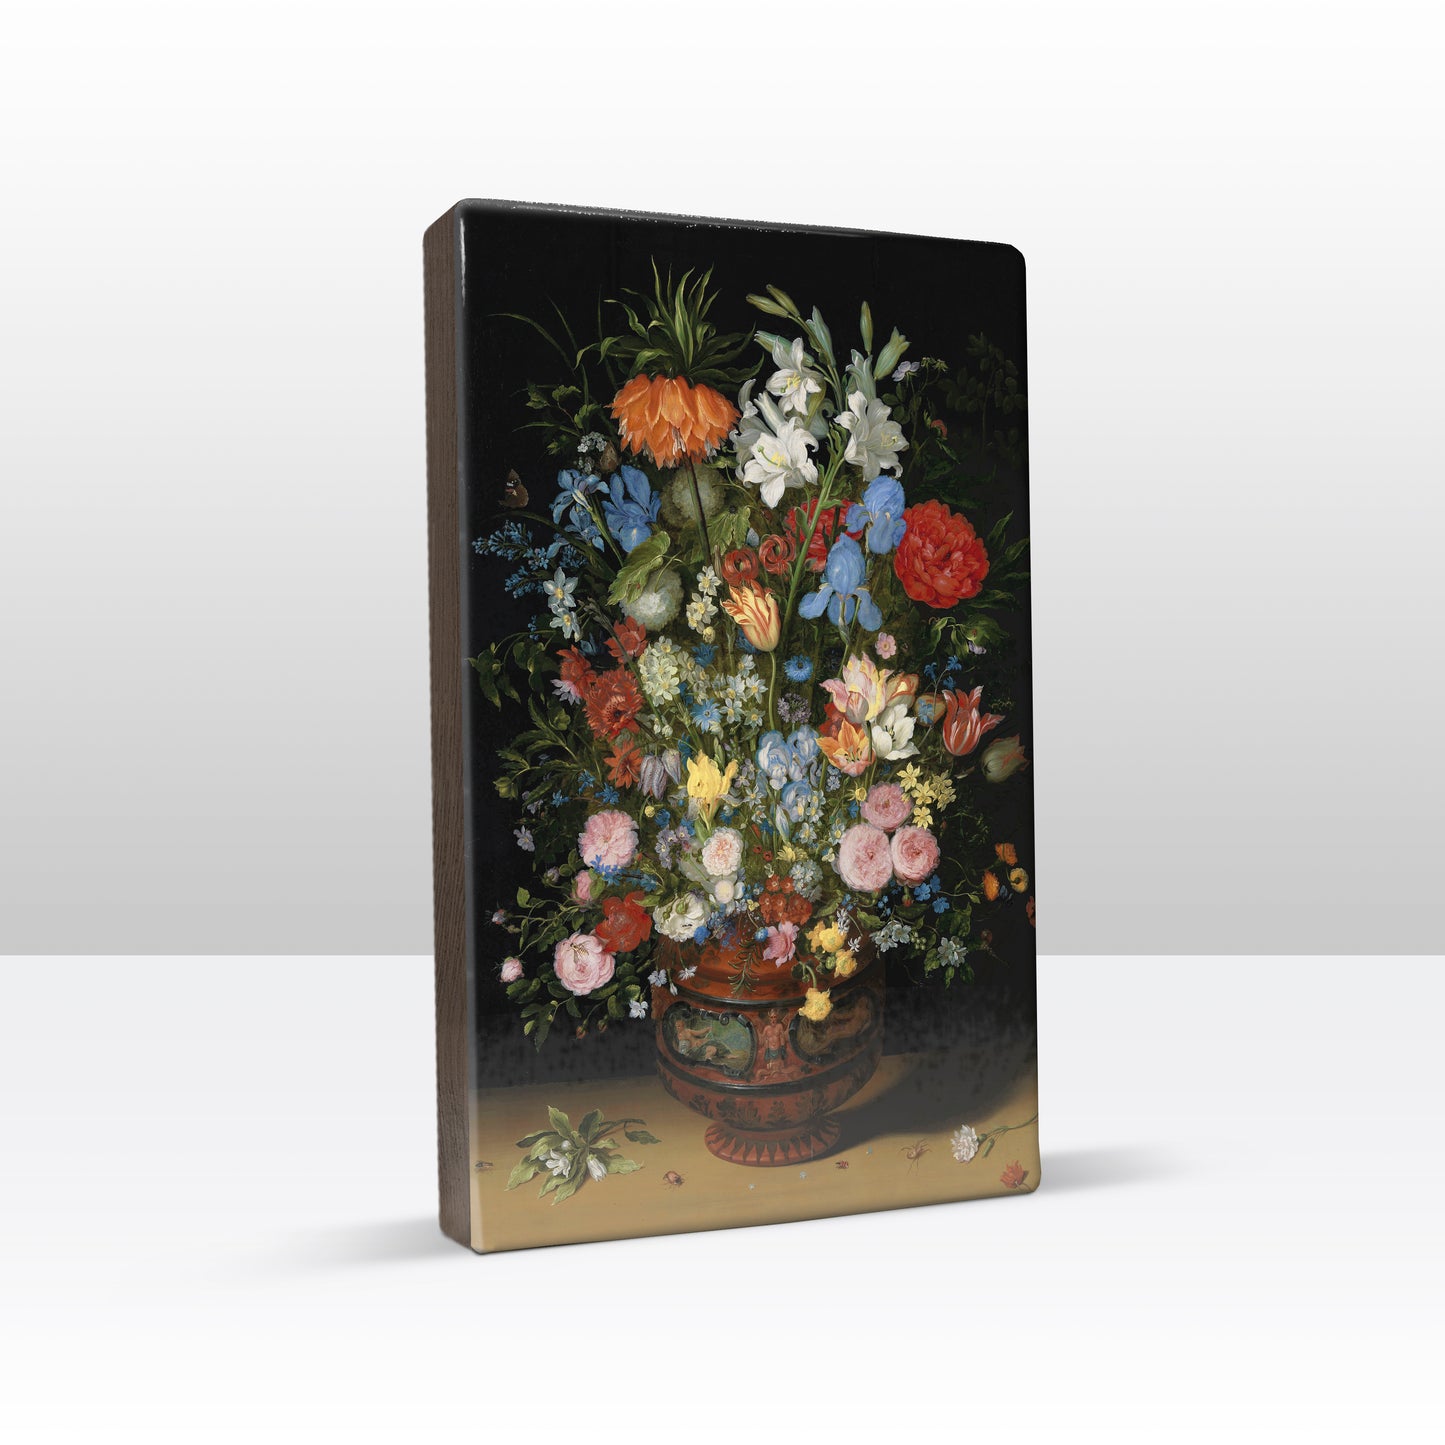 Laque print - Flowers in a vase - Jan Brueghel the Elder - 19.5 x 30 cm - LP001